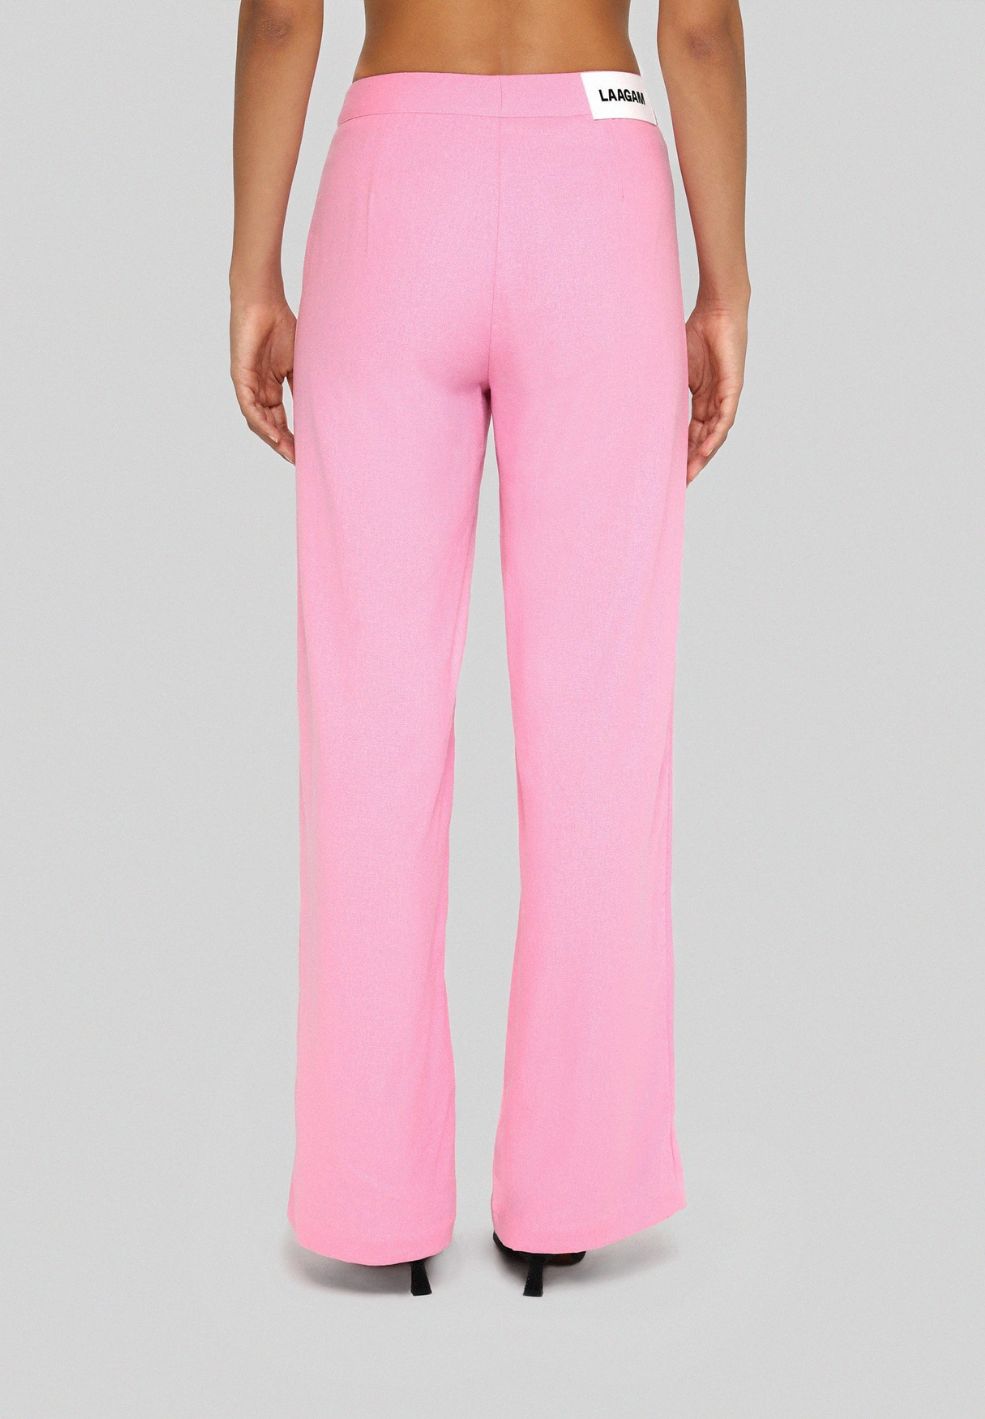 Beso Pink Linen Pants